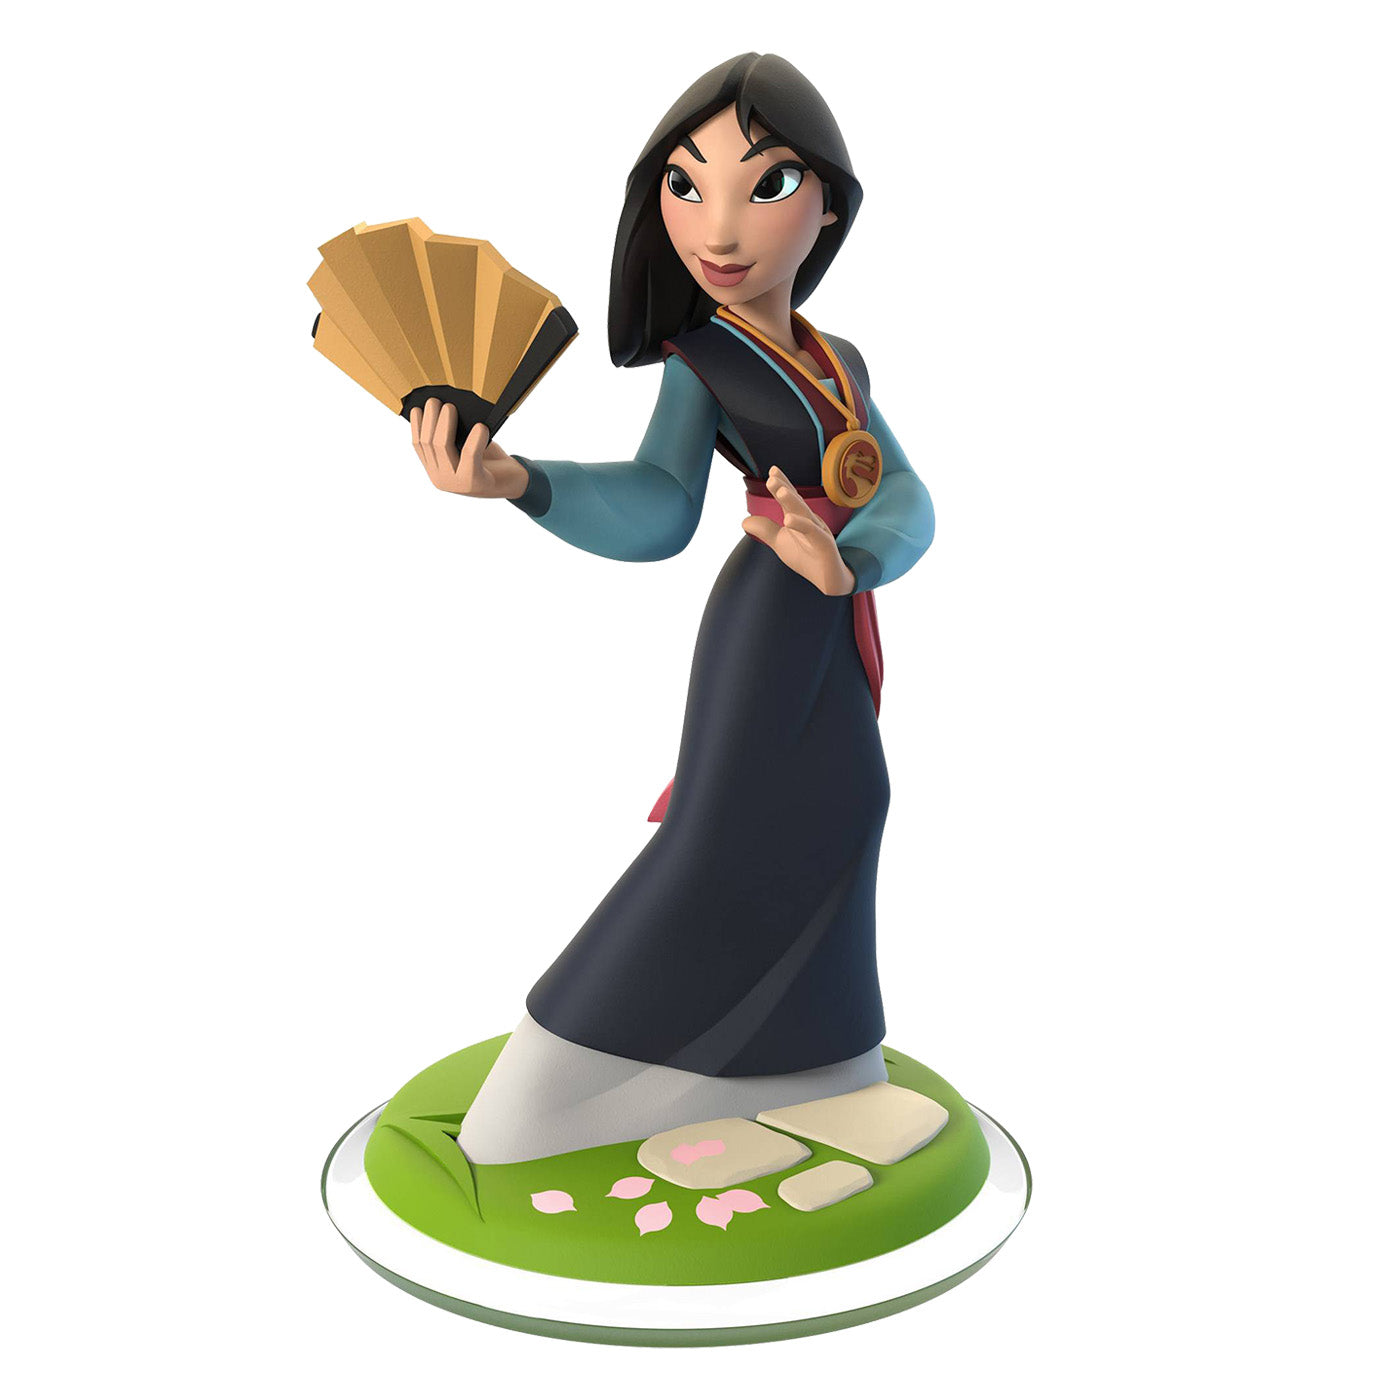 Disney Infinity 3.0 Character: Mulan